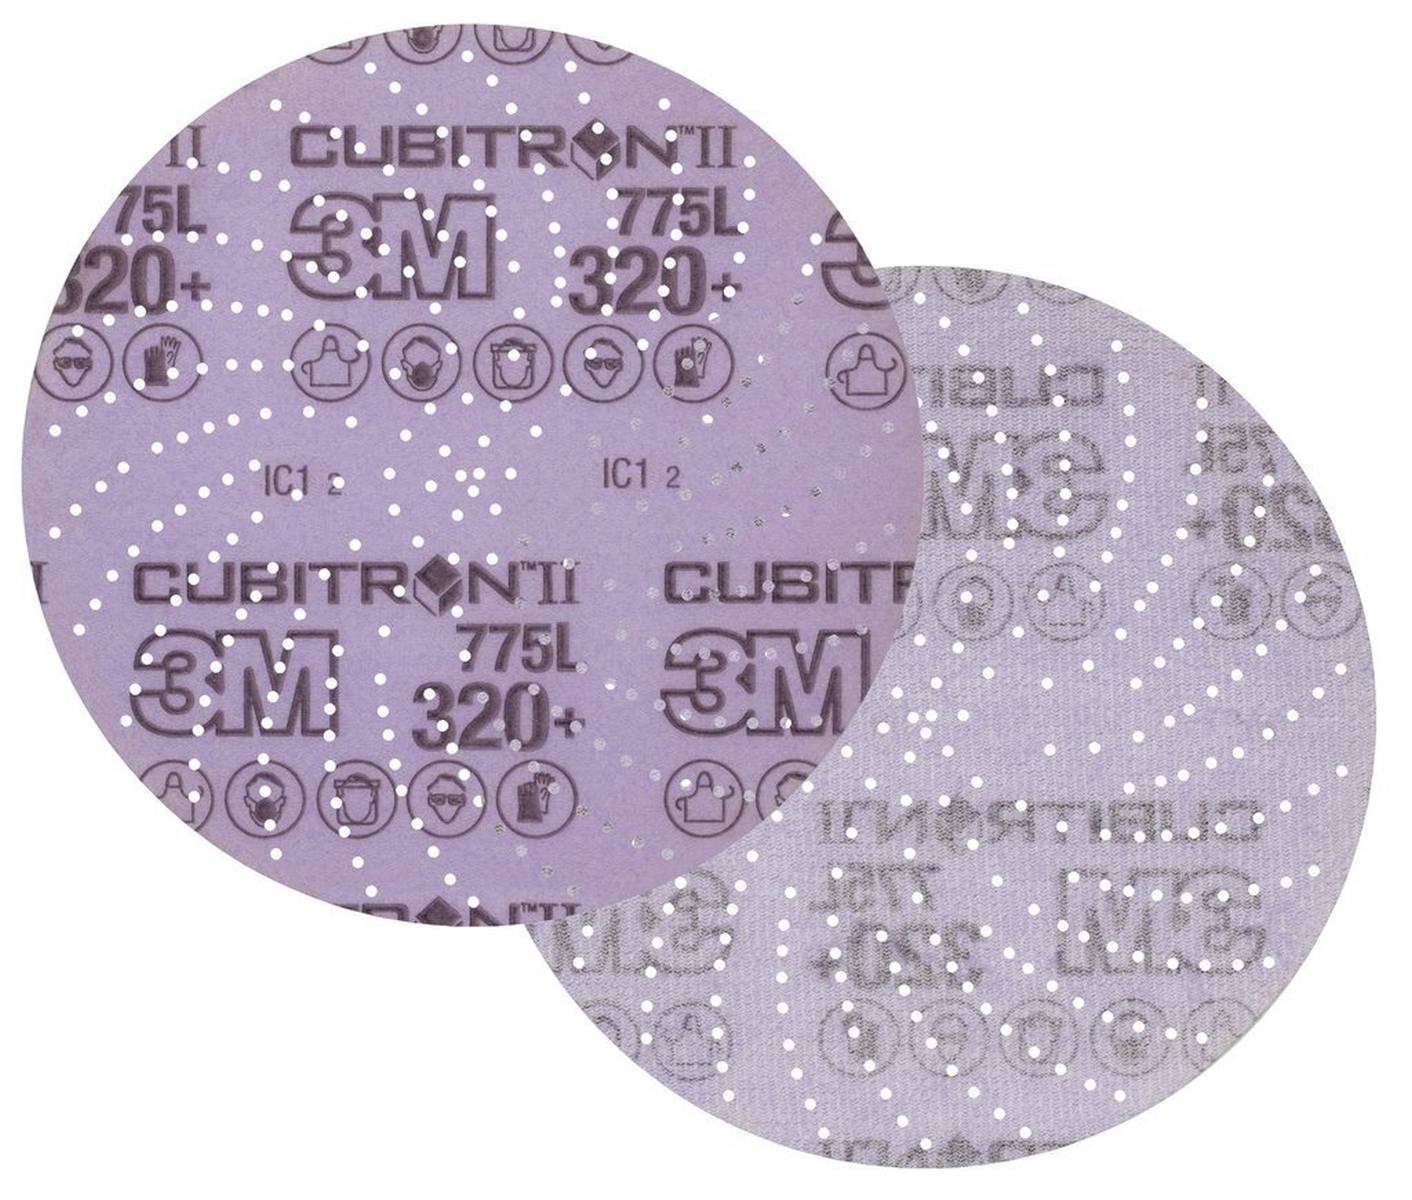 3M Cubitron II Hookit film disc 775L, 150 mm, 320 , multihole #47082